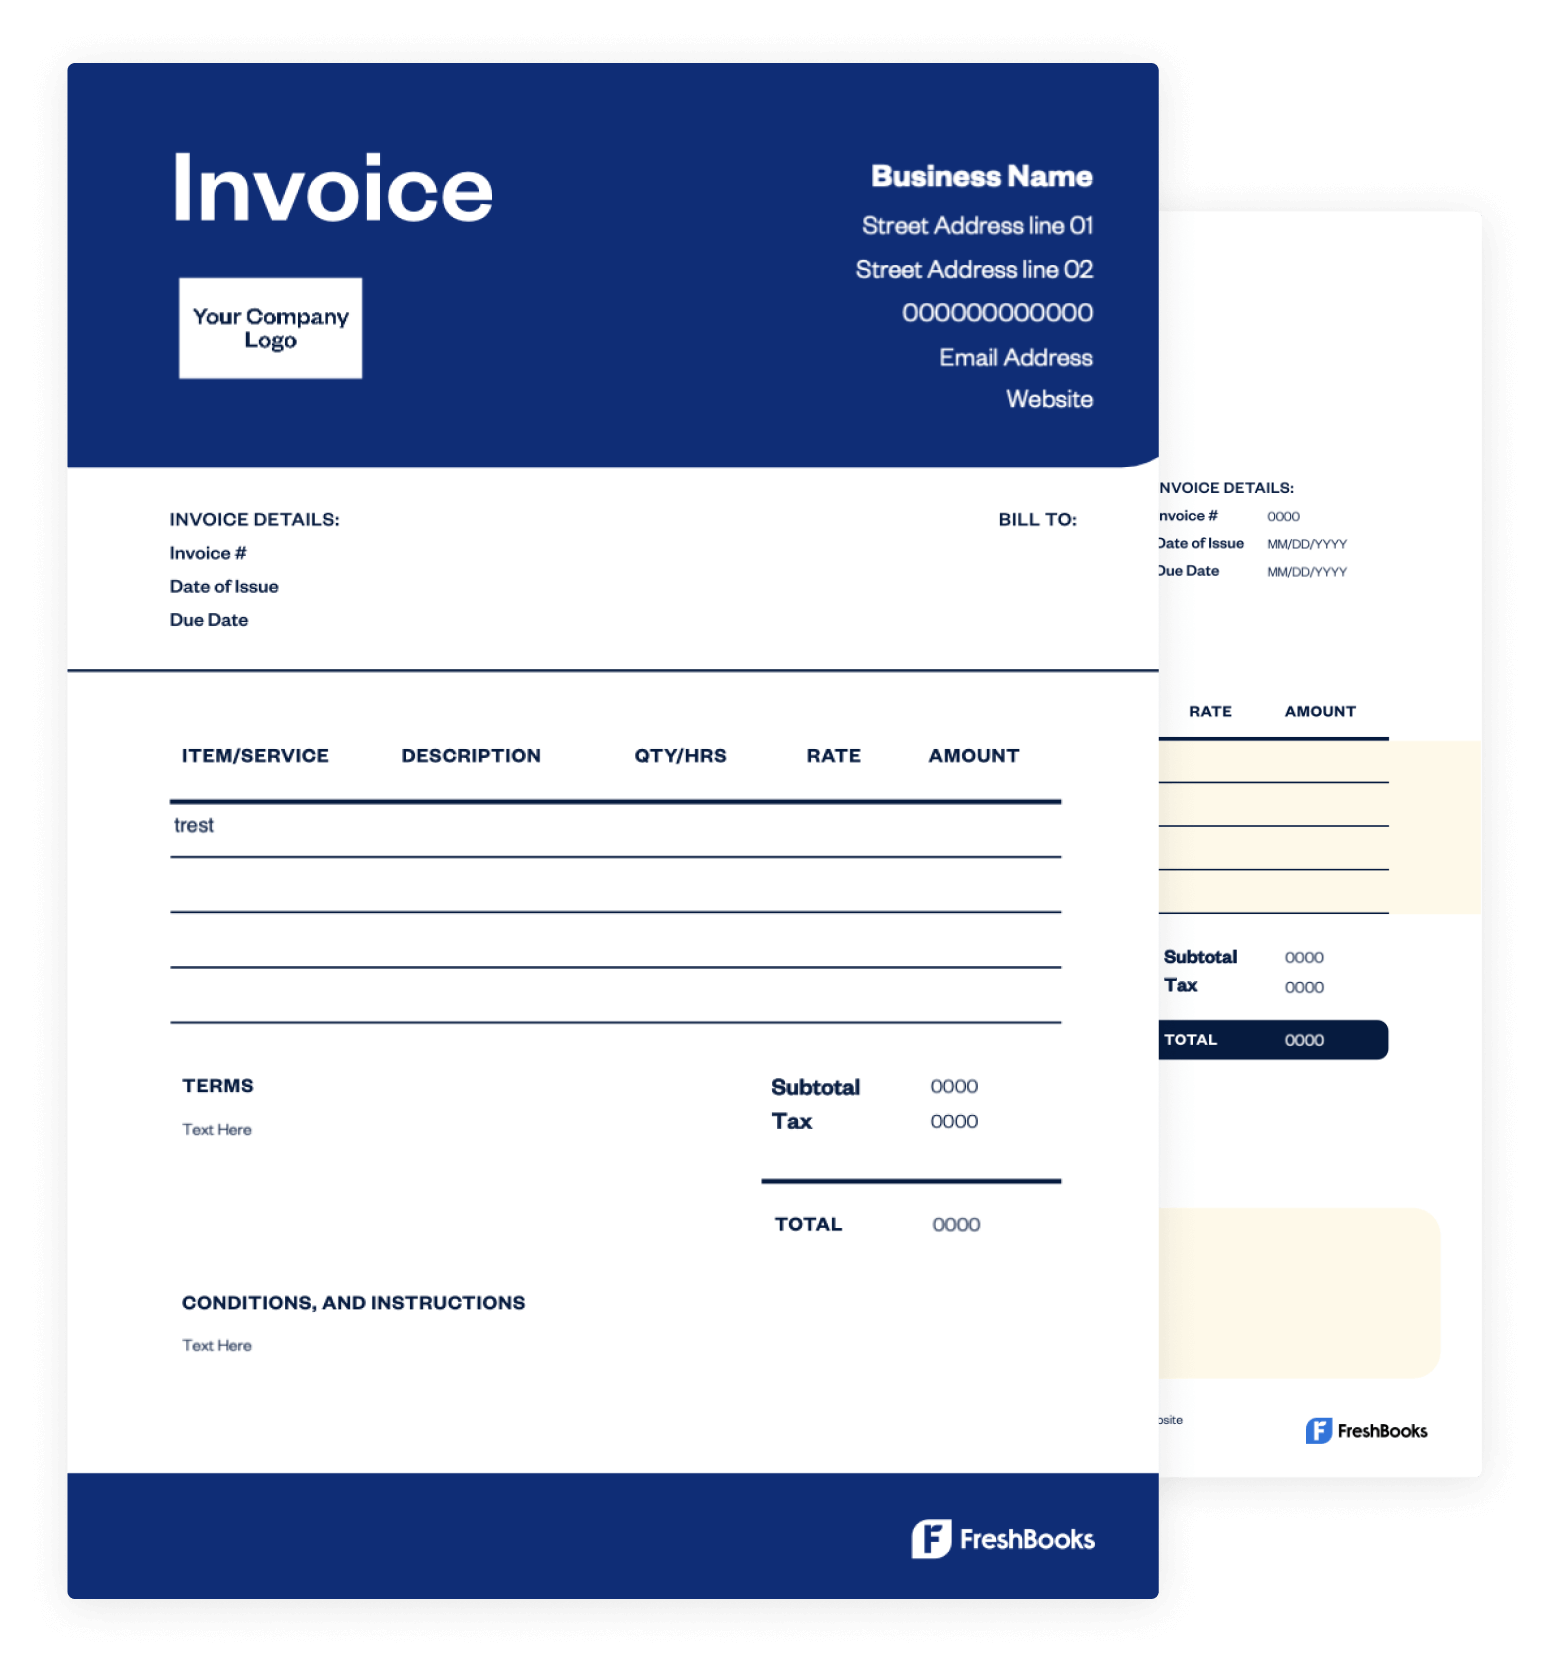 Compare Itemized Invoice Template Vs FreshBooks invoicing software